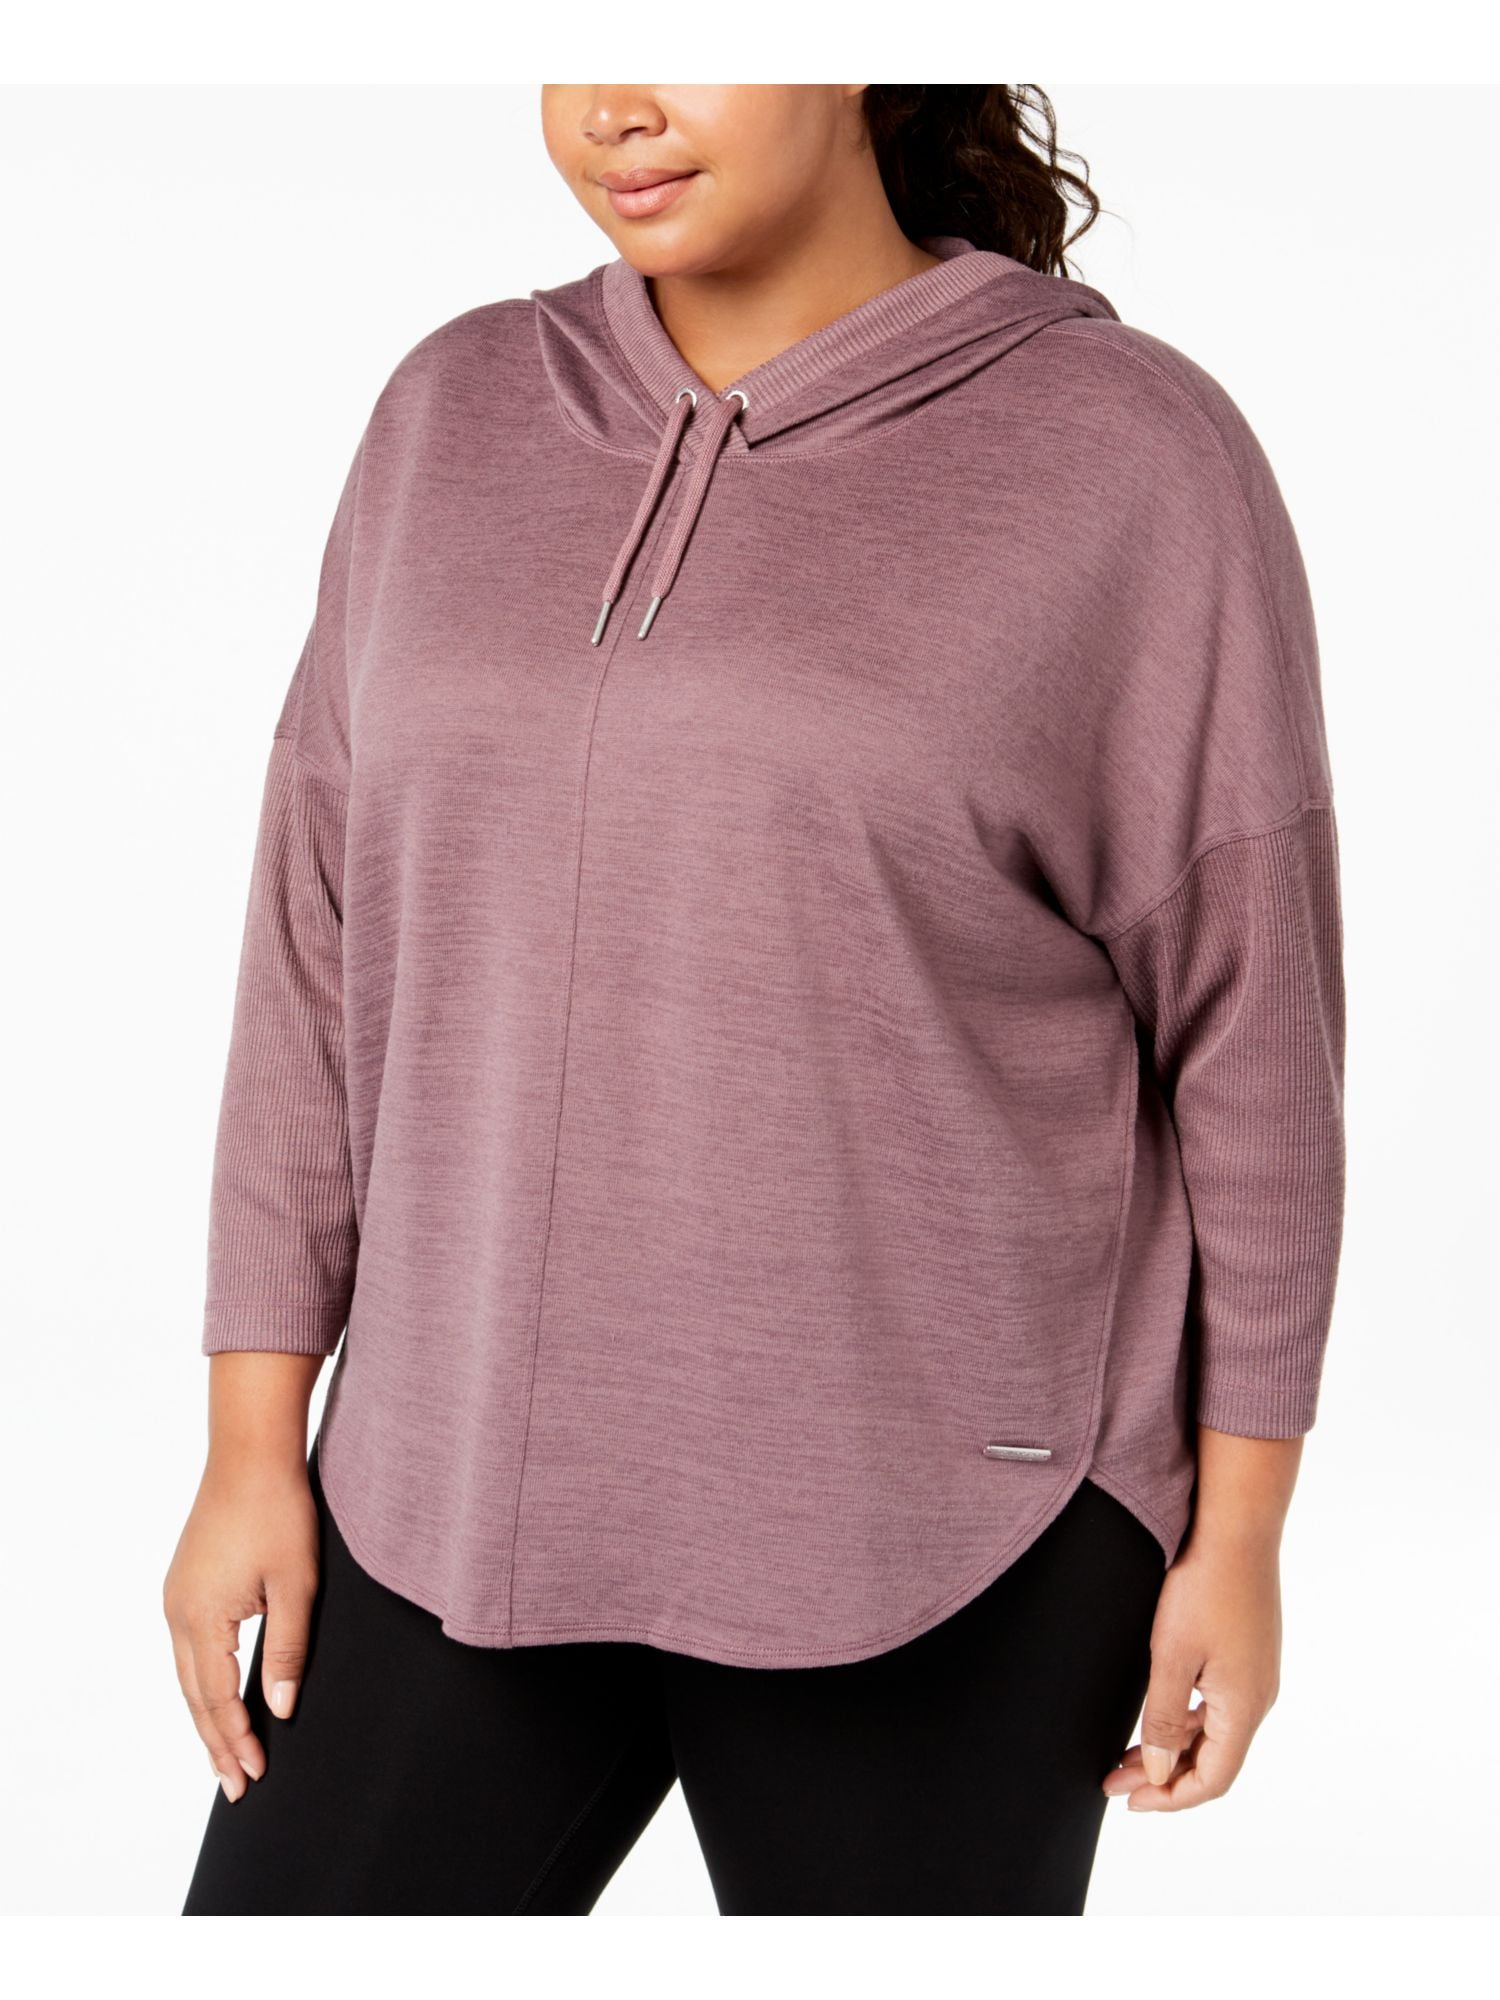 Memoriseren Validatie streep CALVIN KLEIN $69 Womens New 1469 Purple Hooded Kimono Sleeve Top 2X Plus  B+B - Walmart.com